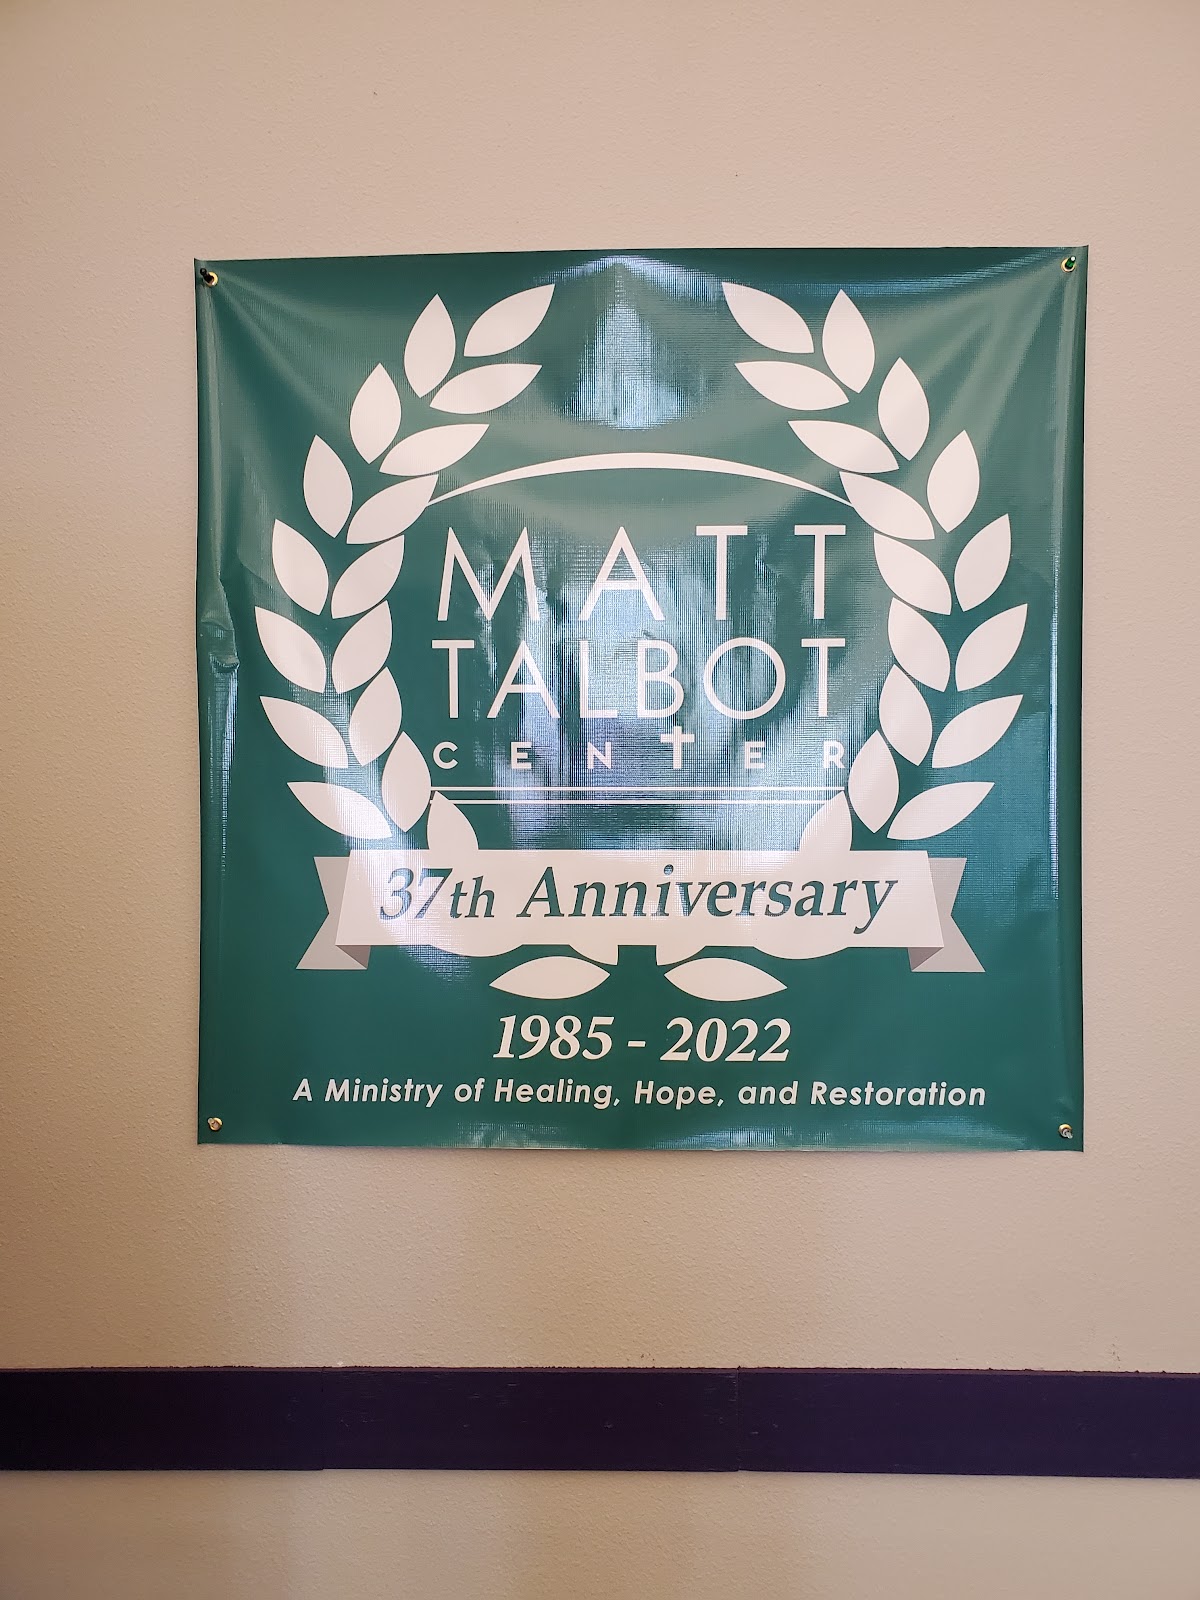 Matt Talbot Center